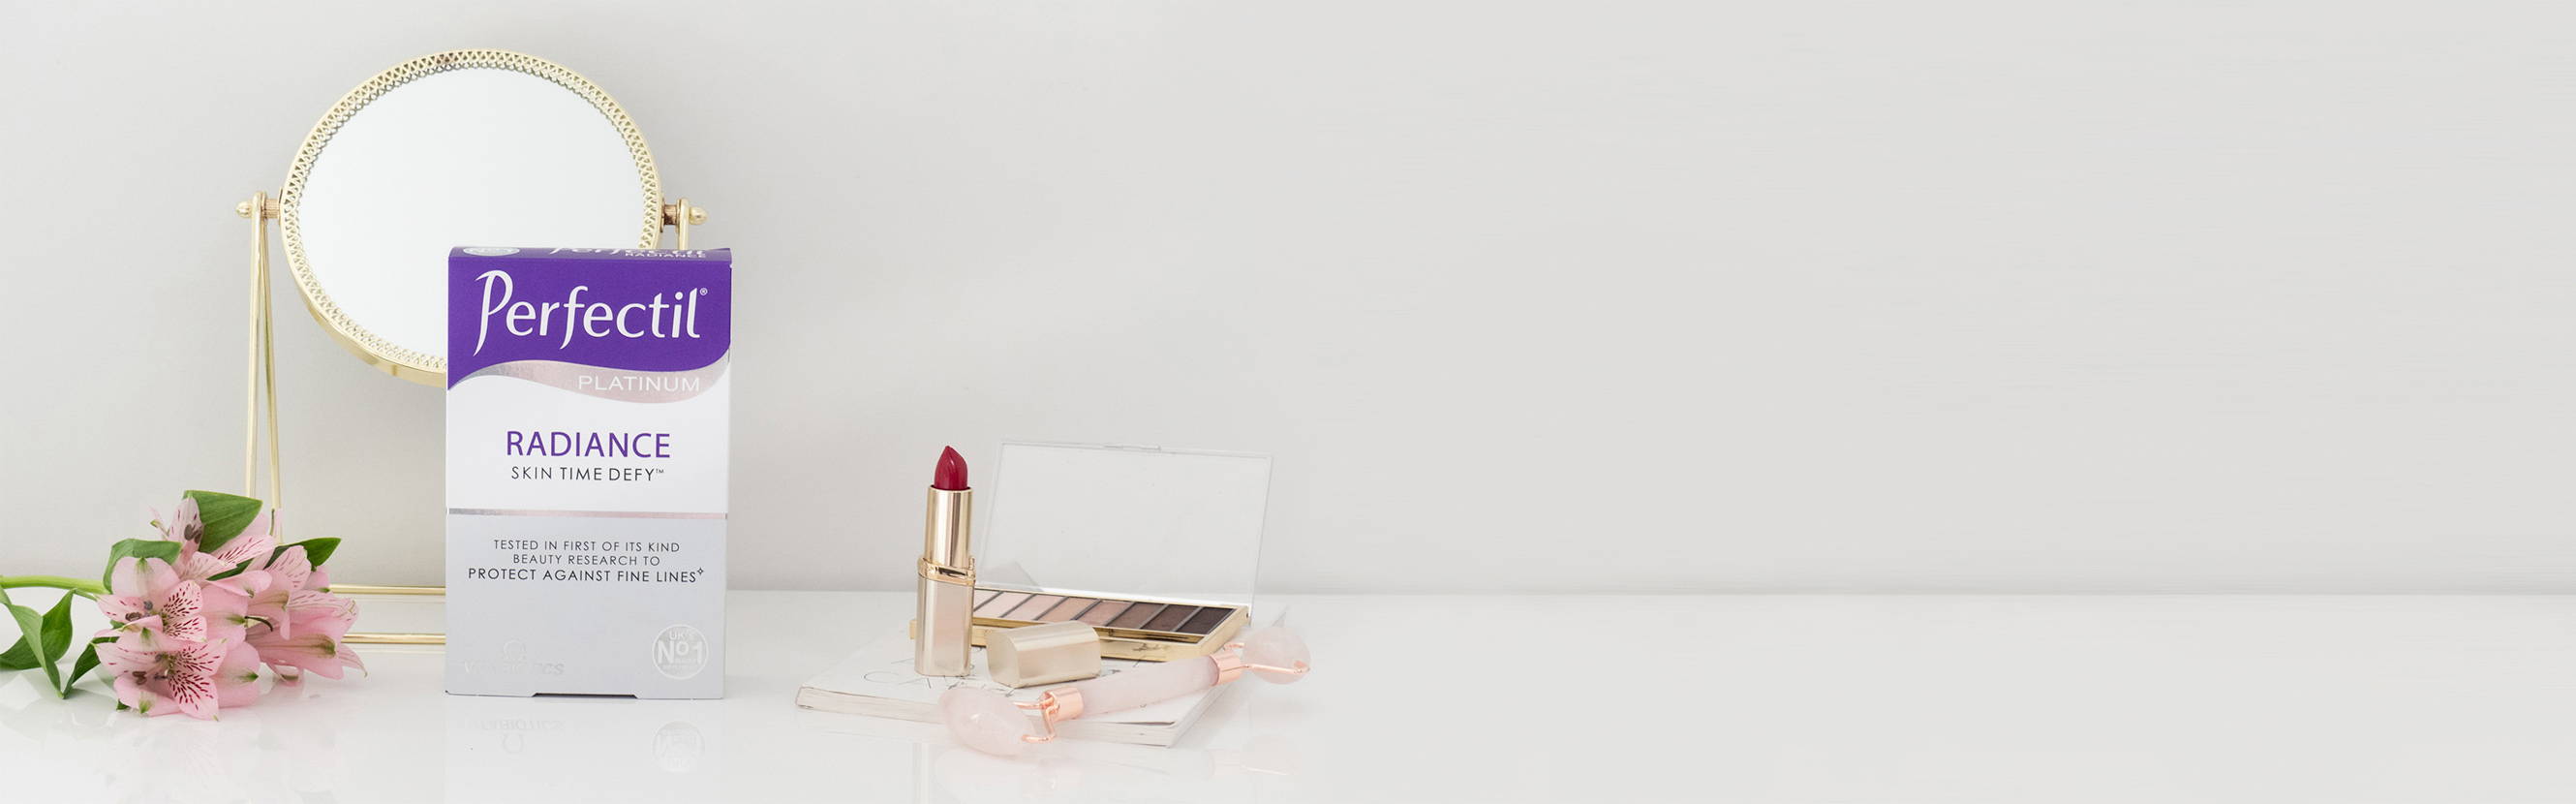 Perfectil Radiance Packshot With A Mirror, Lipstick & Eyeshadow Around It